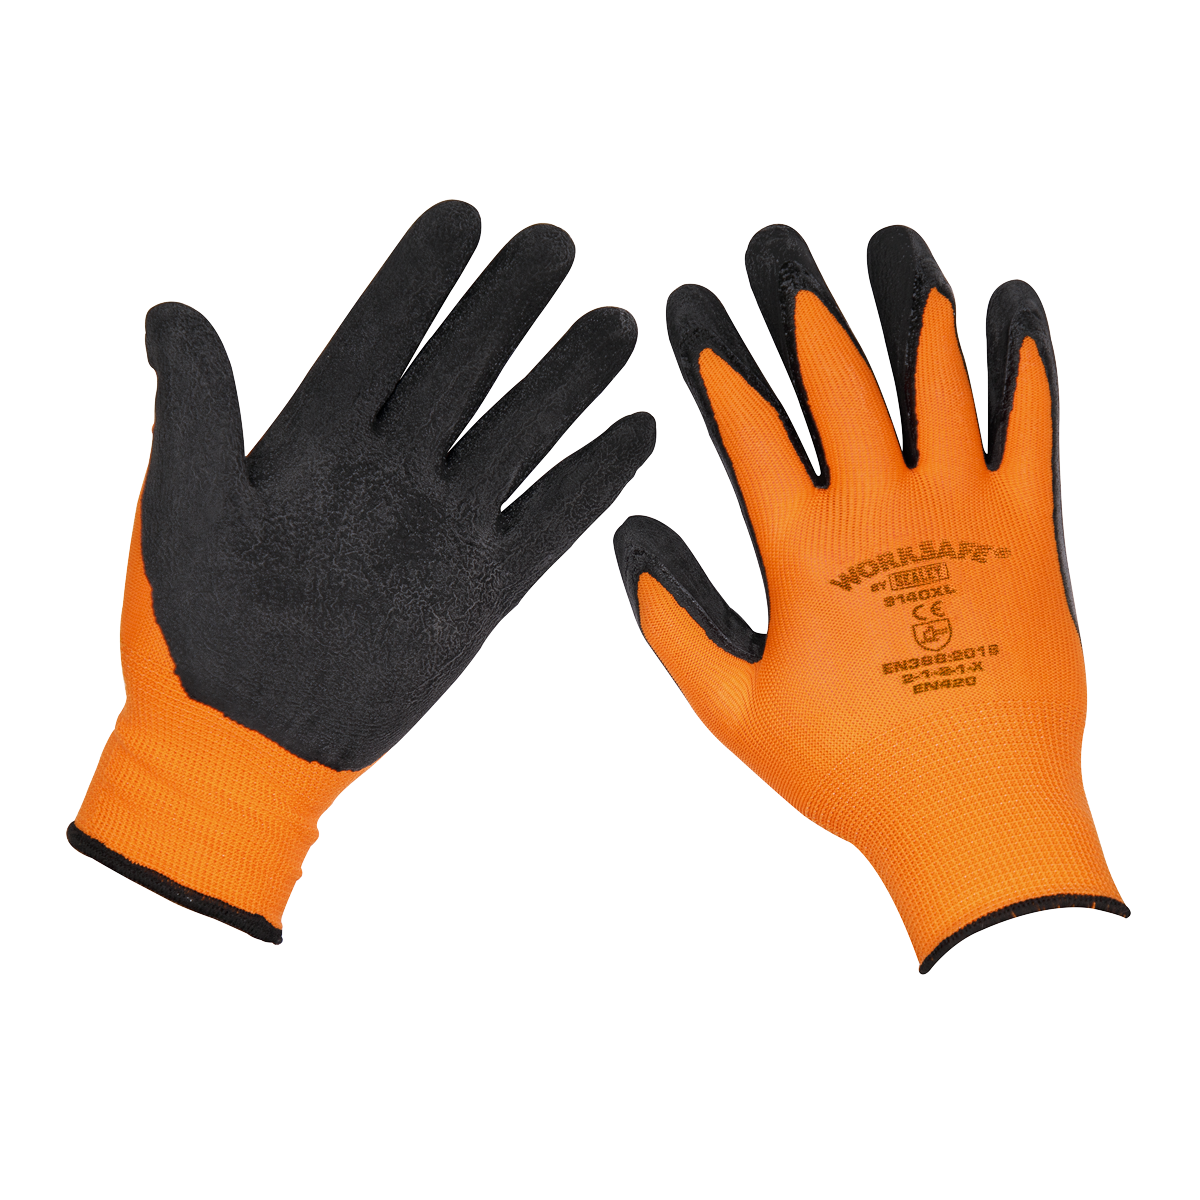 Sealey Foam Latex Grippa Gloves (X-Large) - Pair 9140XL